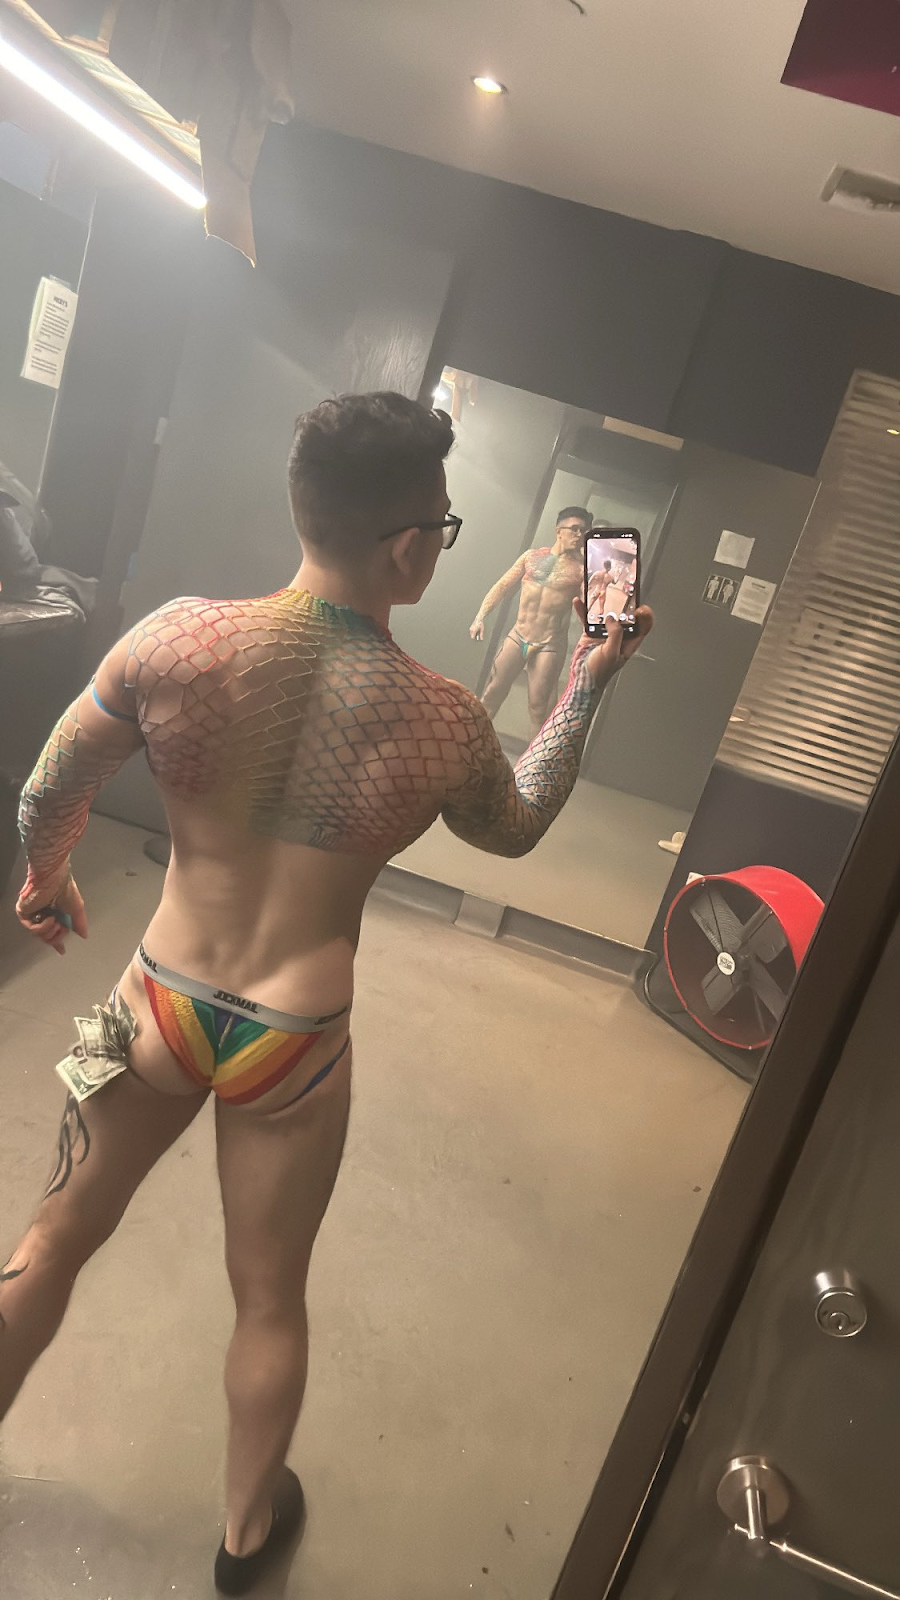 stripper and onlyfans content creator Clark Davis wearing rainbow jockstrap and dollar bills in his underwear wearing mesh shirt and taking selfie in stripclub mirror